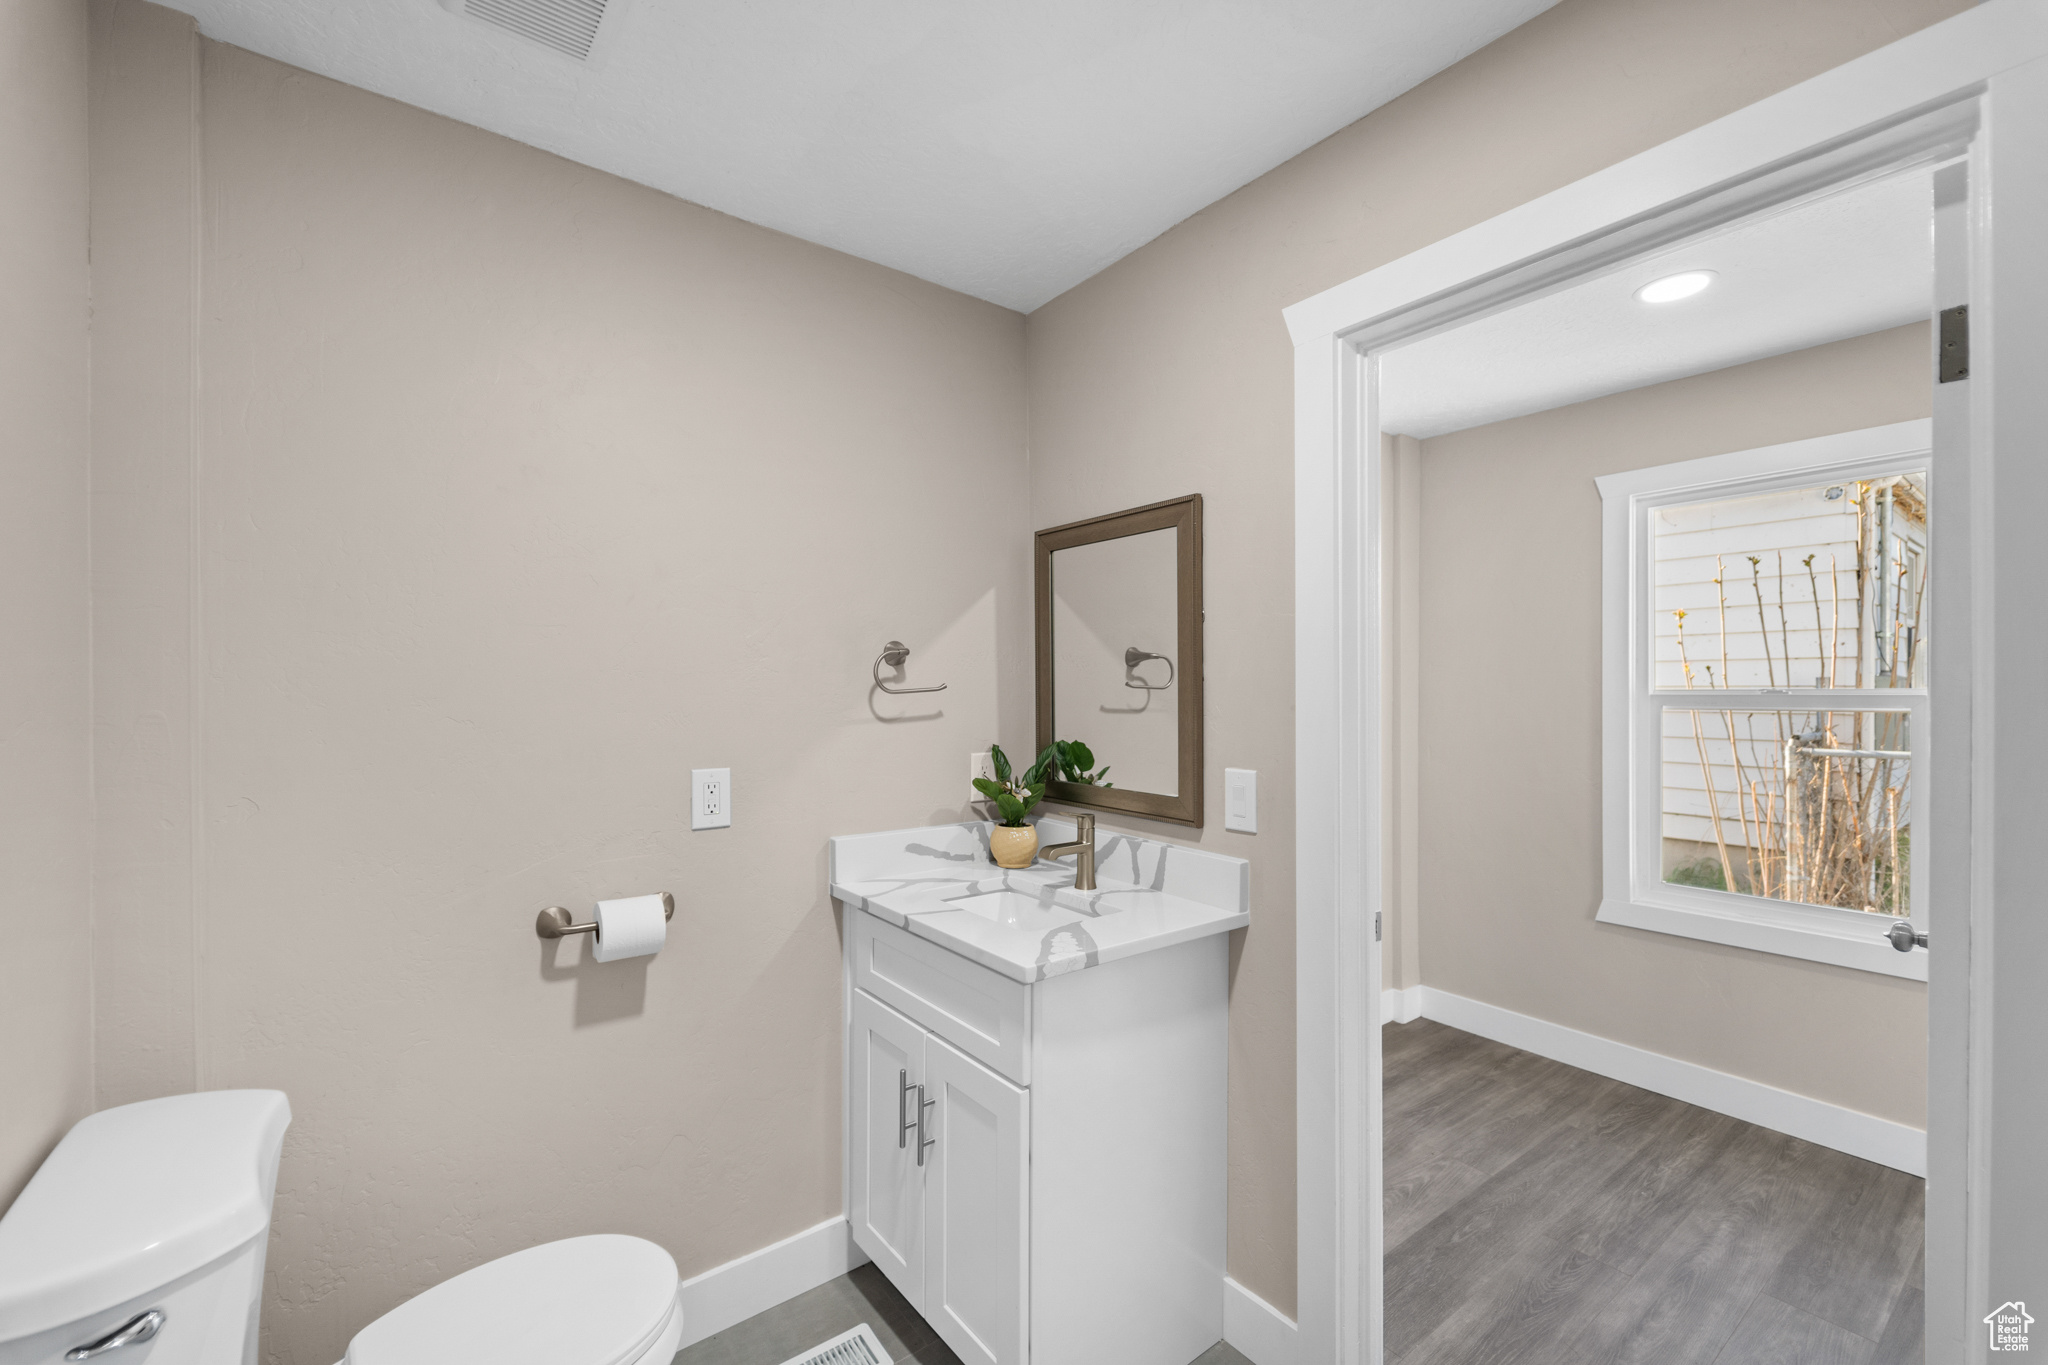 Bathroom with hardwood / wood-style flooring, vanity, and toilet